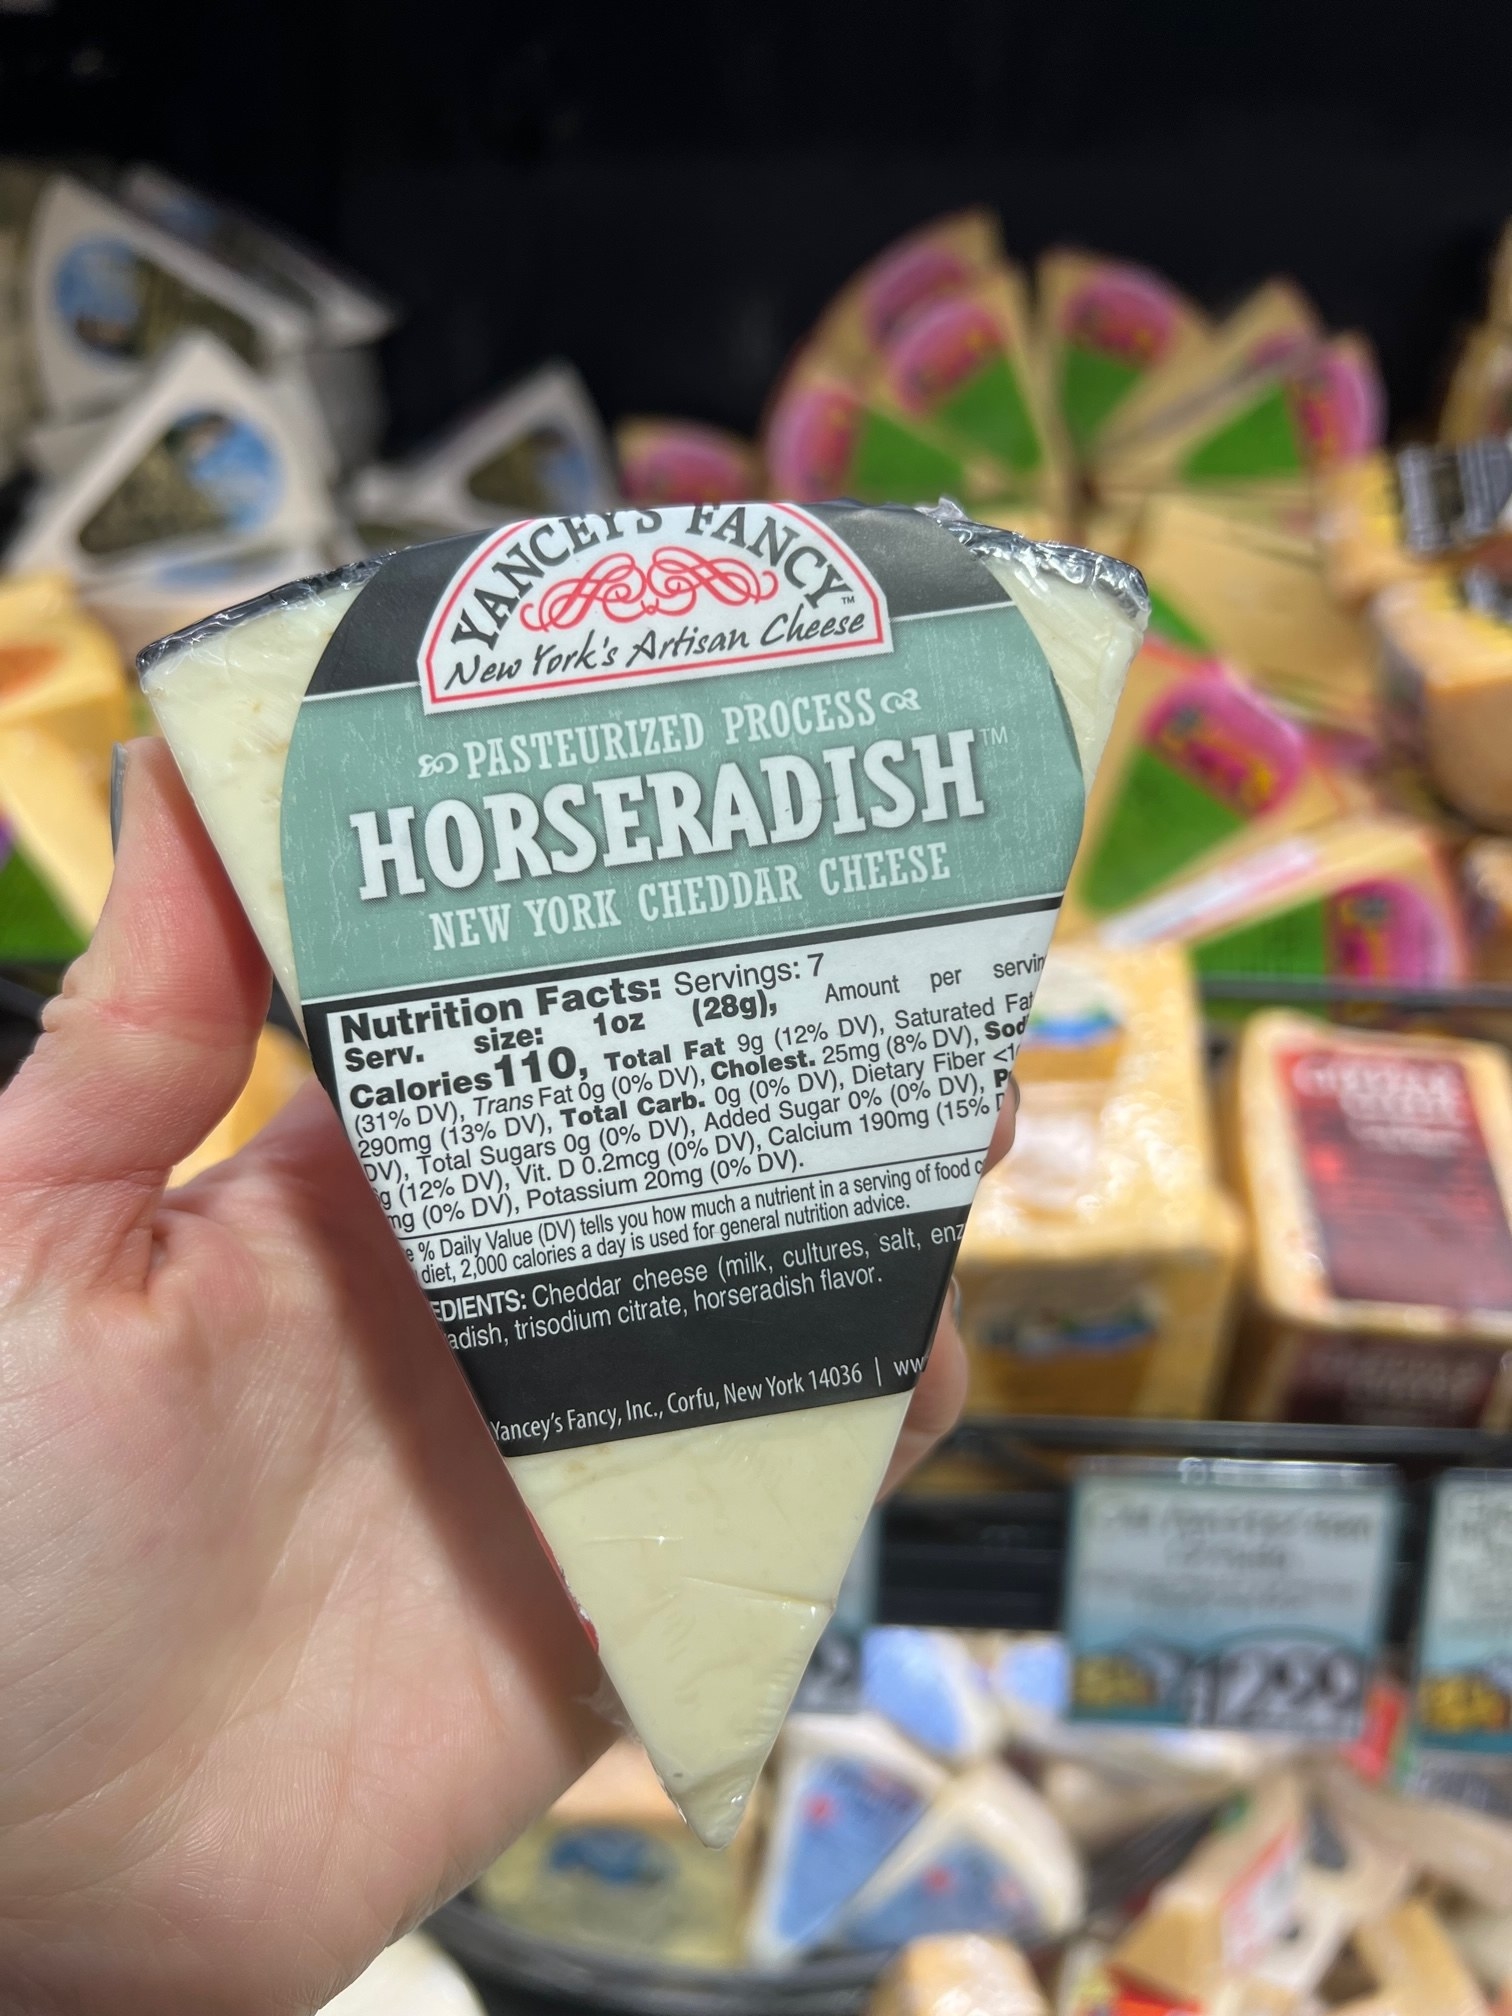 Horseradish New York Cheddar Cheese